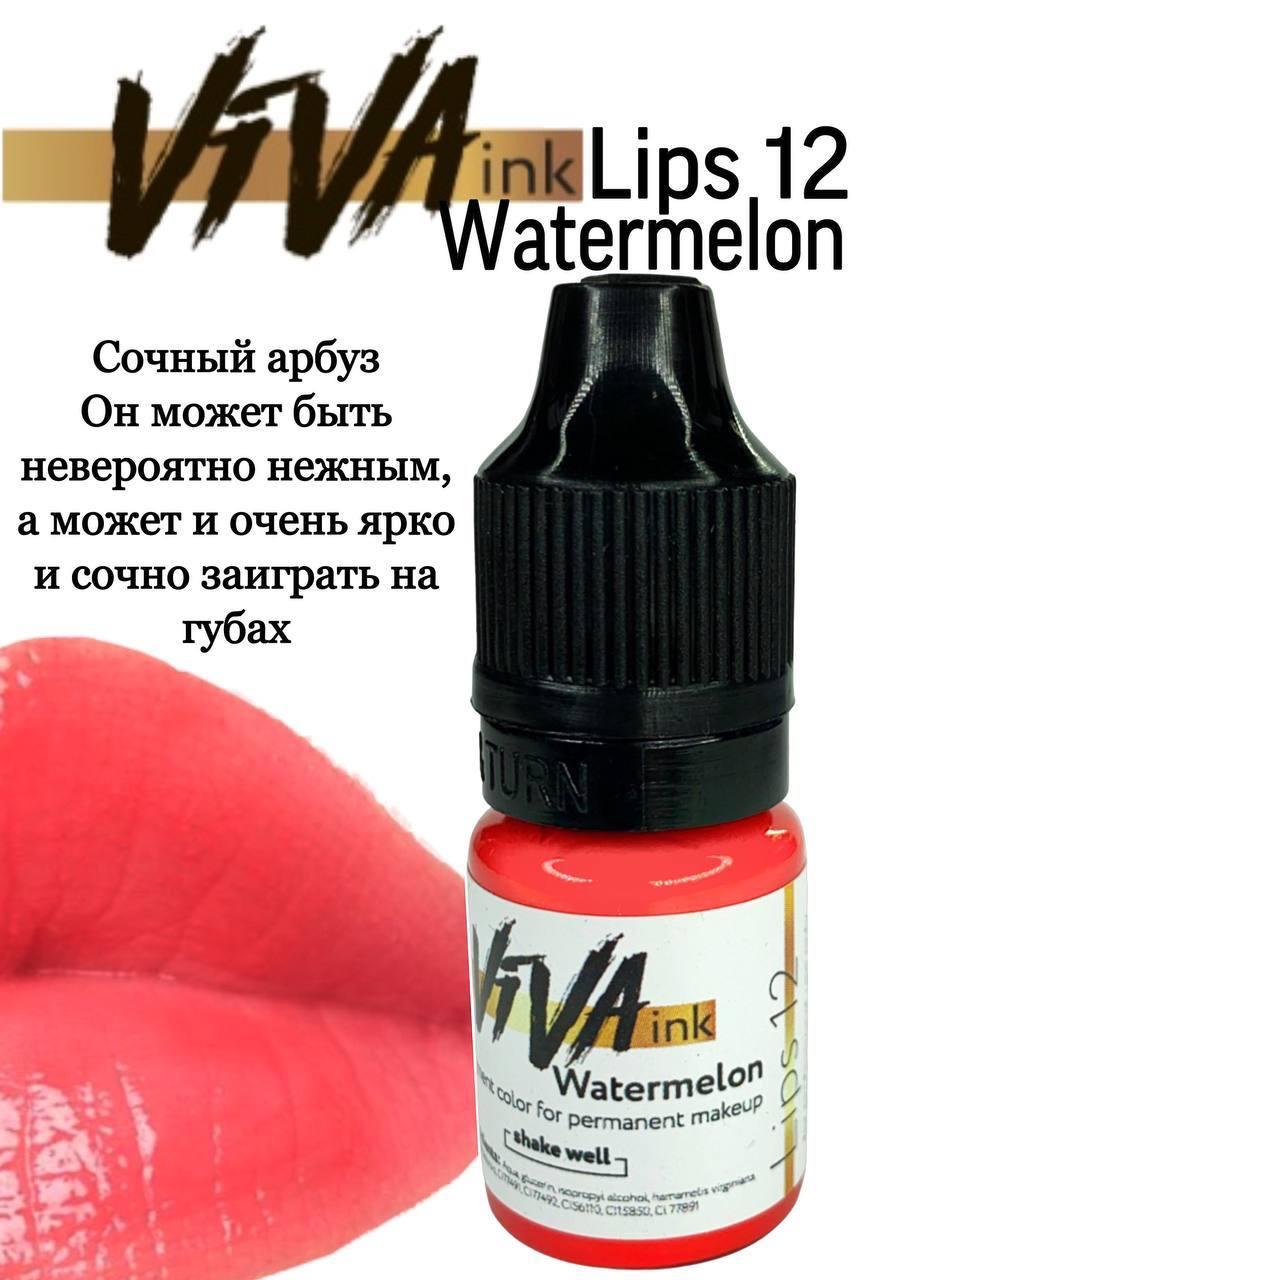 VIVA ink Lips 12 Watermelon (6мл) пігмент для татуажу